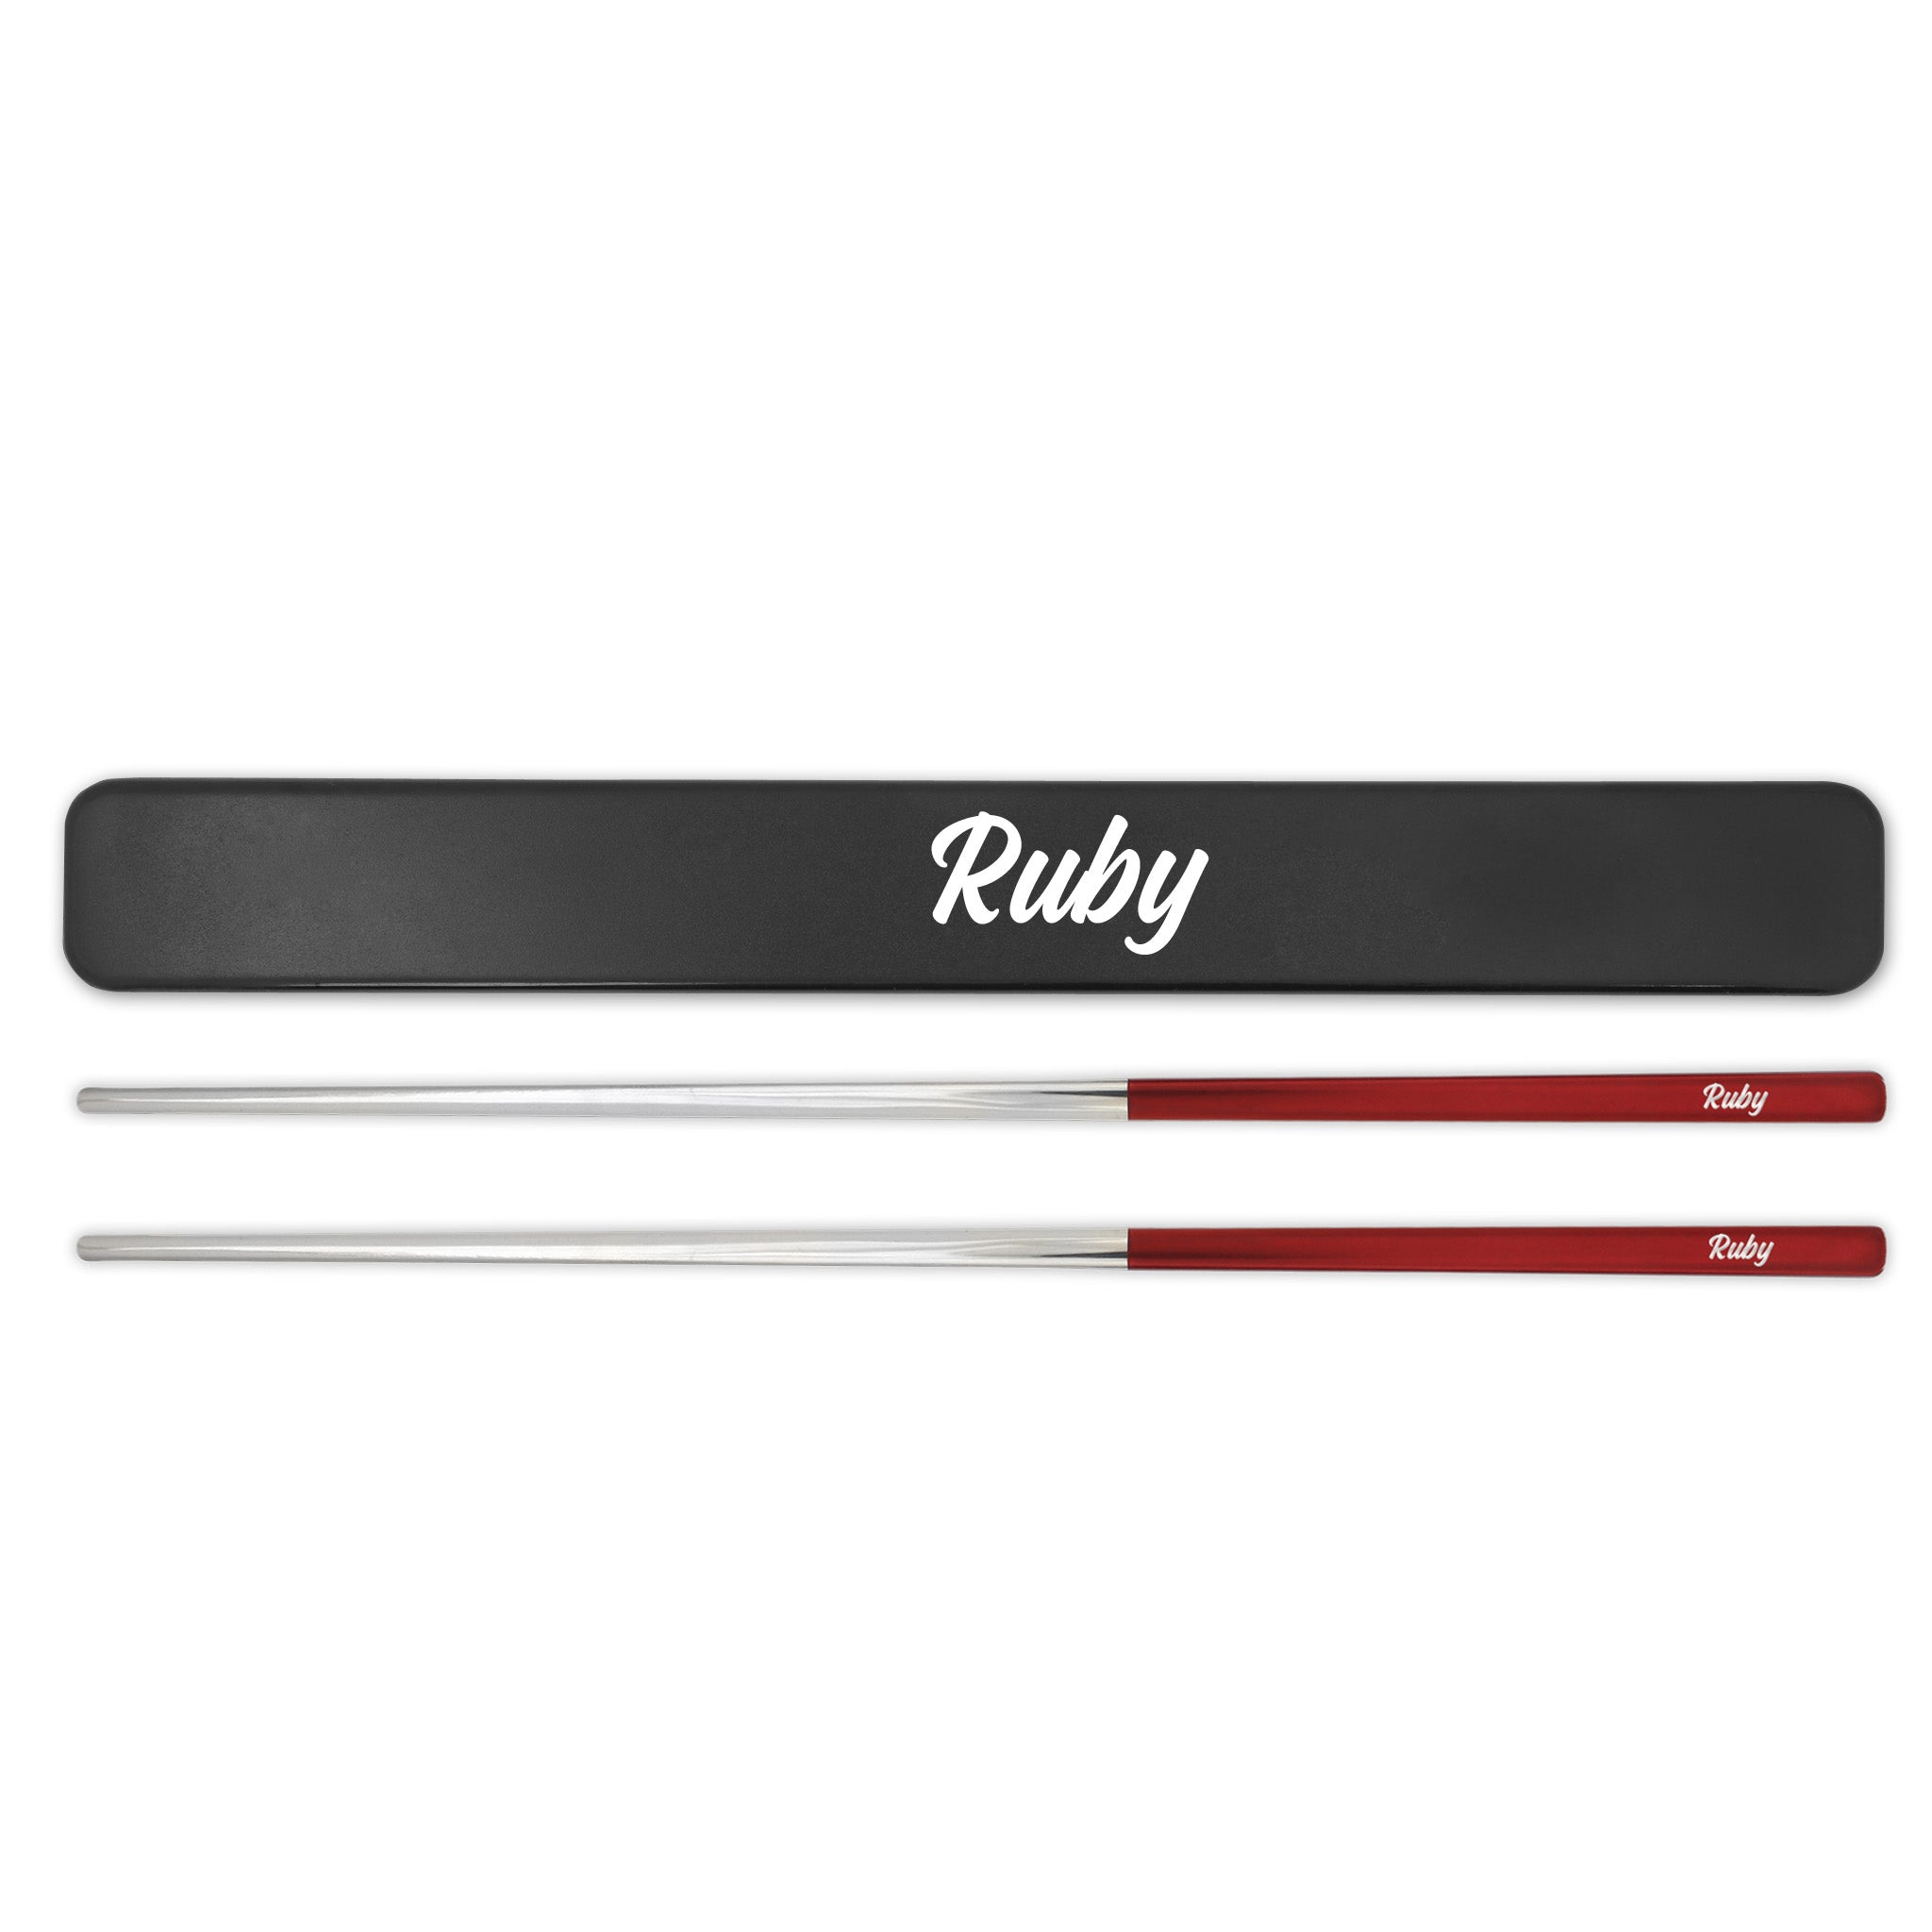 Stainless Steel Reusable Chopsticks Set (Red / Silver)